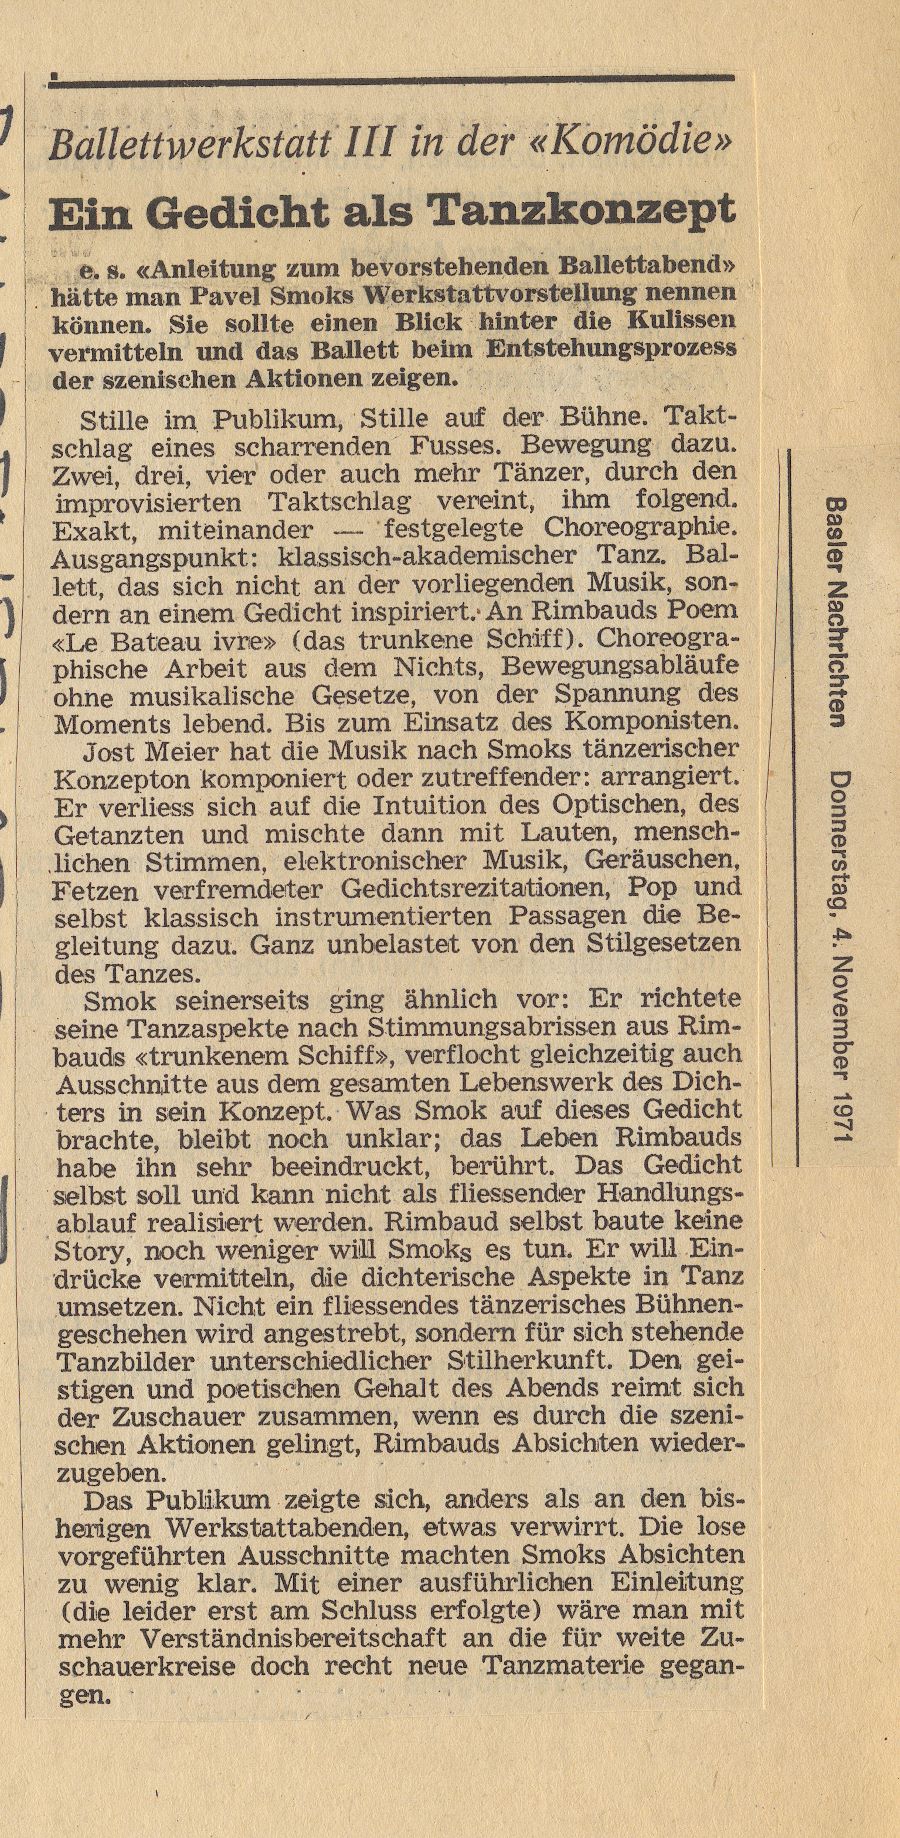 recenze na premiéru projektu Ballettwerkstatt III, Basilej 1971 (archiv IPŠ)